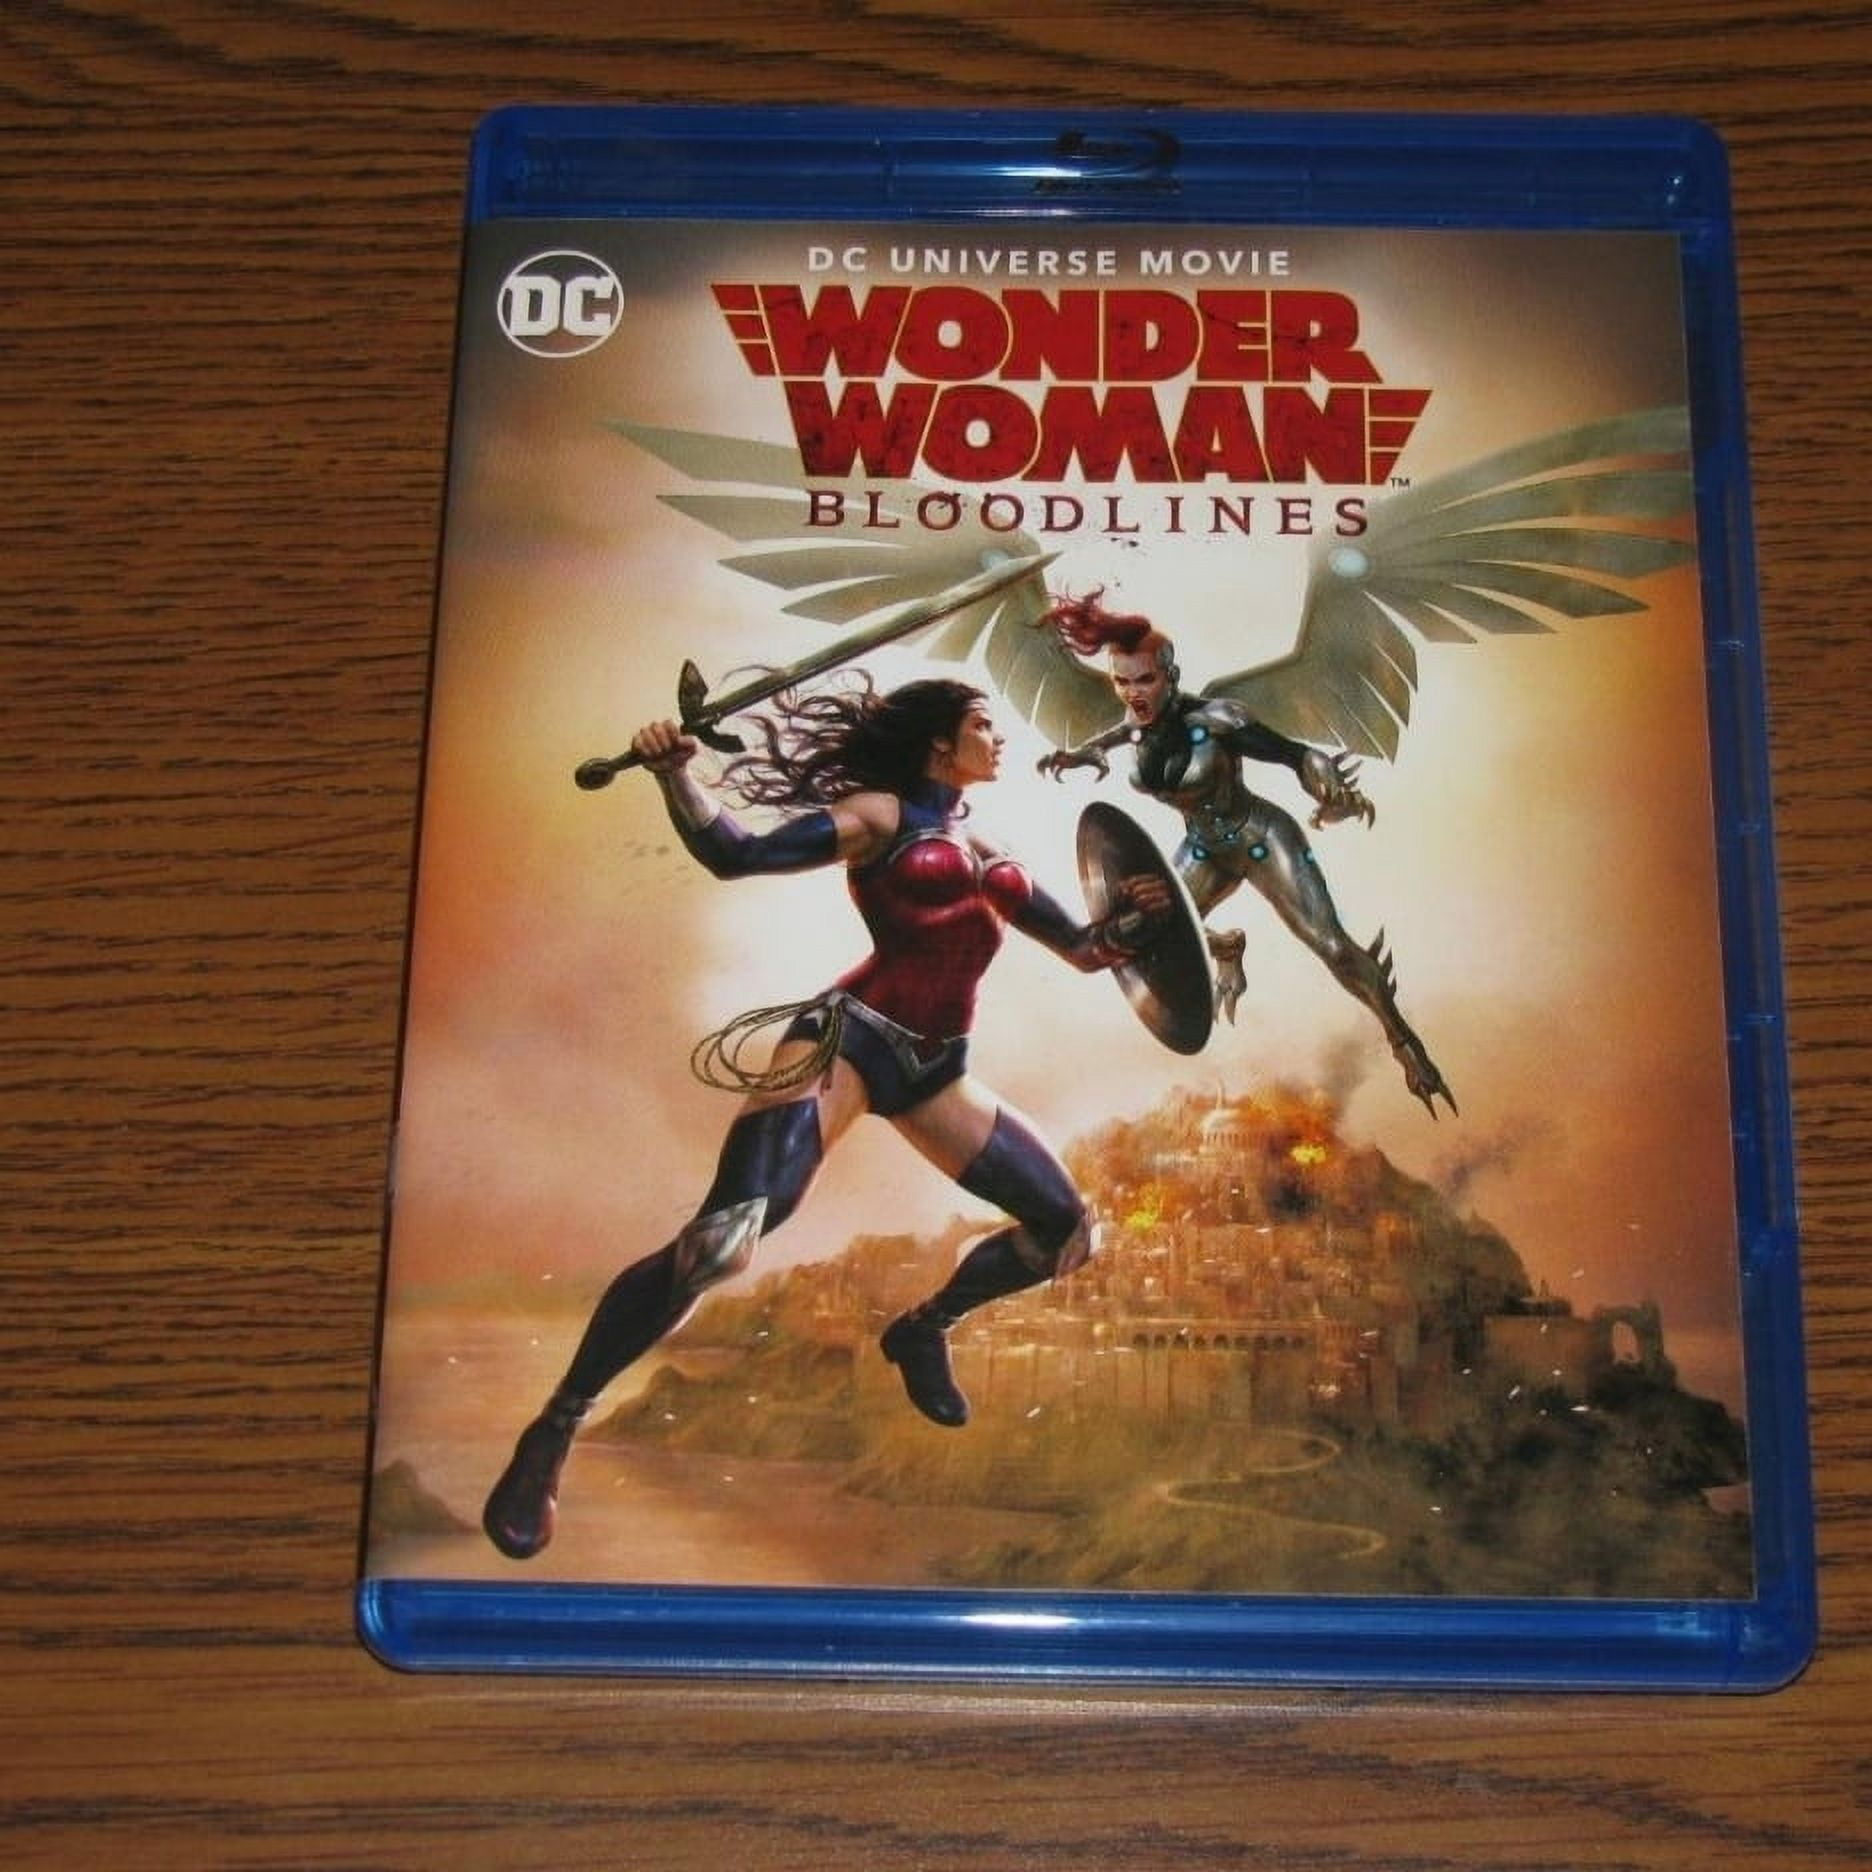 WONDER WOMAN: BLOODLINES Trailer, Box Art, & Details - BATMAN ON FILM